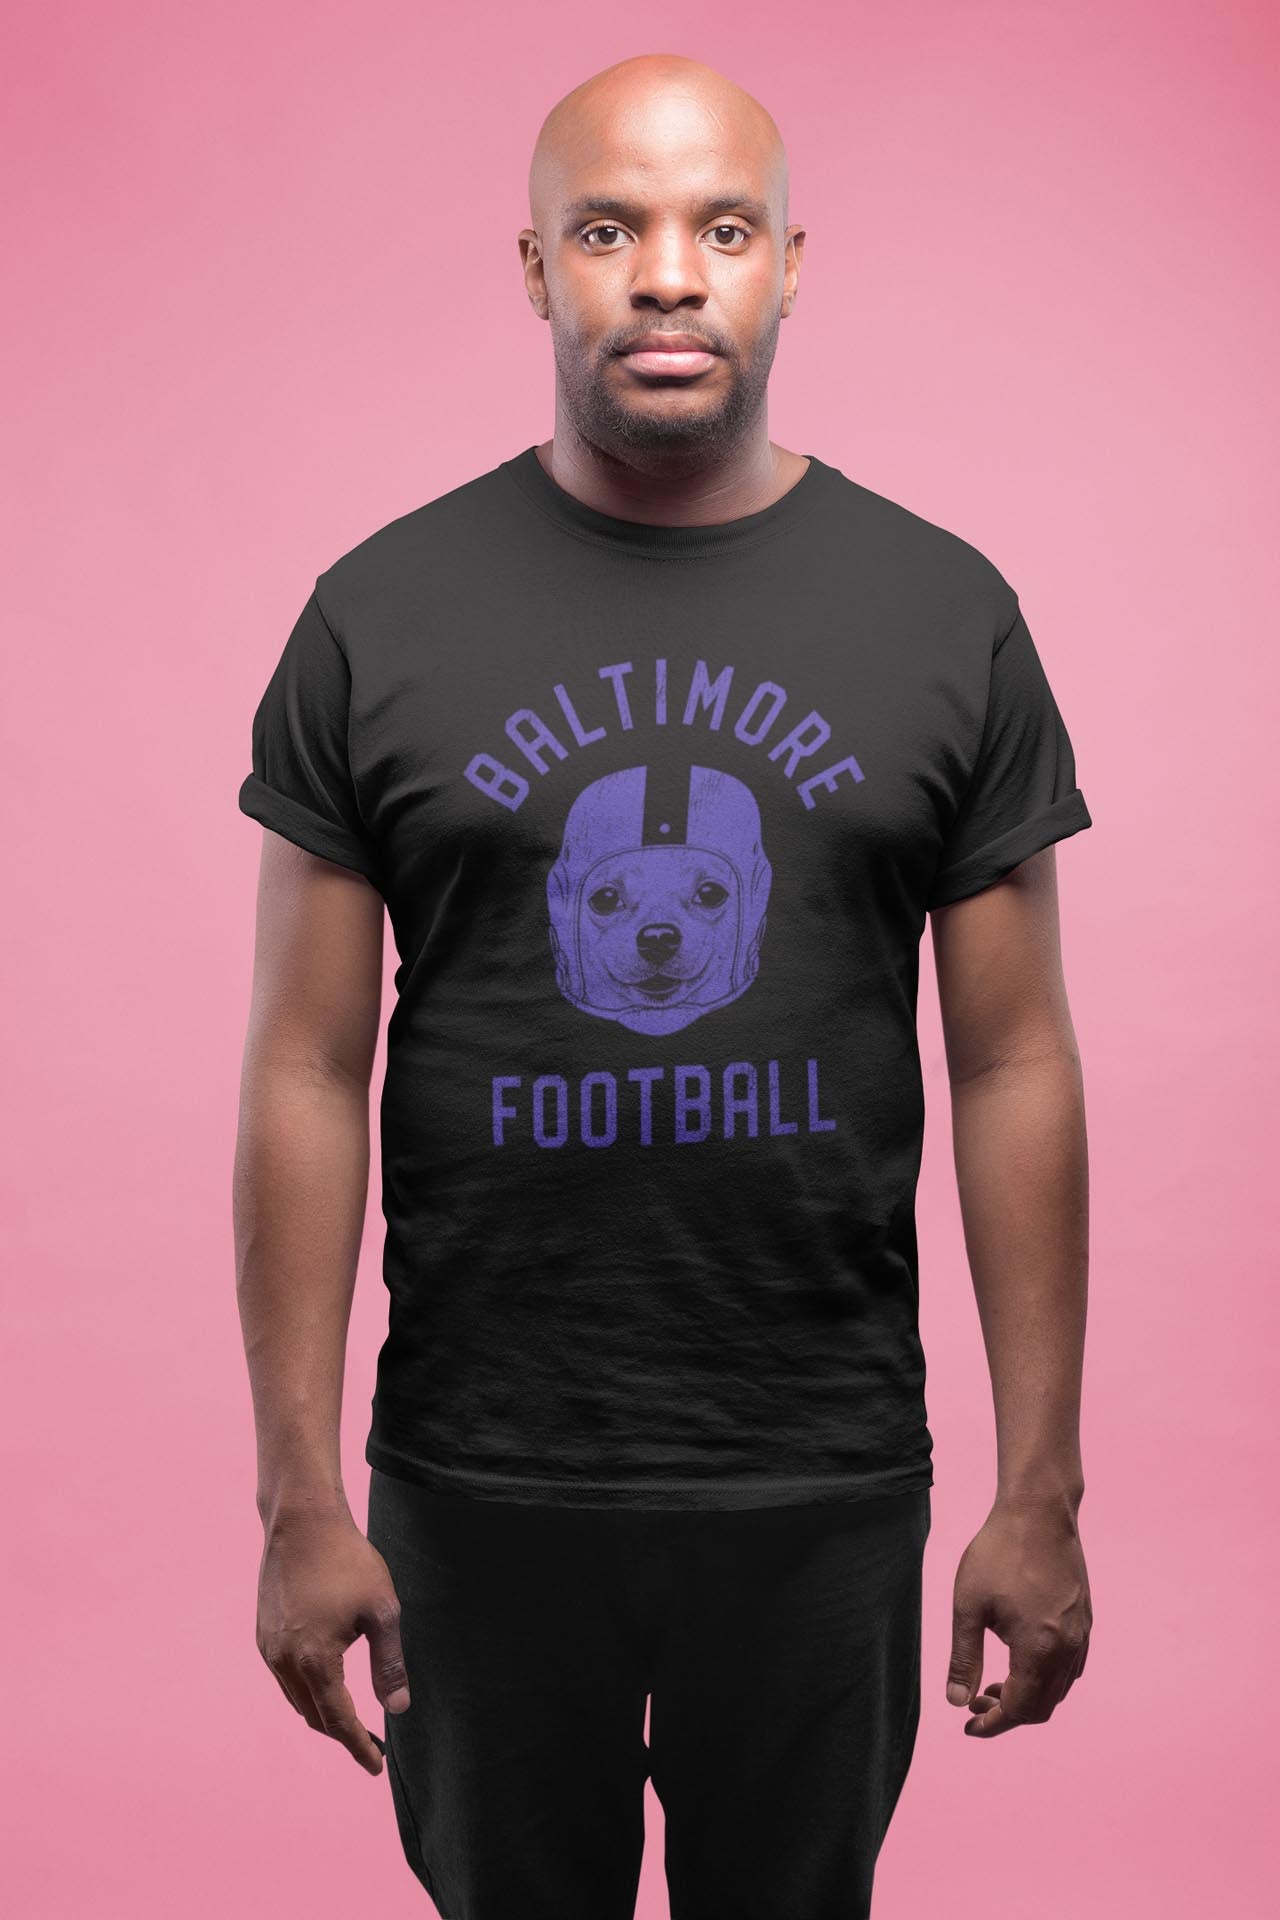 Baltimore Football Chihuahua T-Shirt